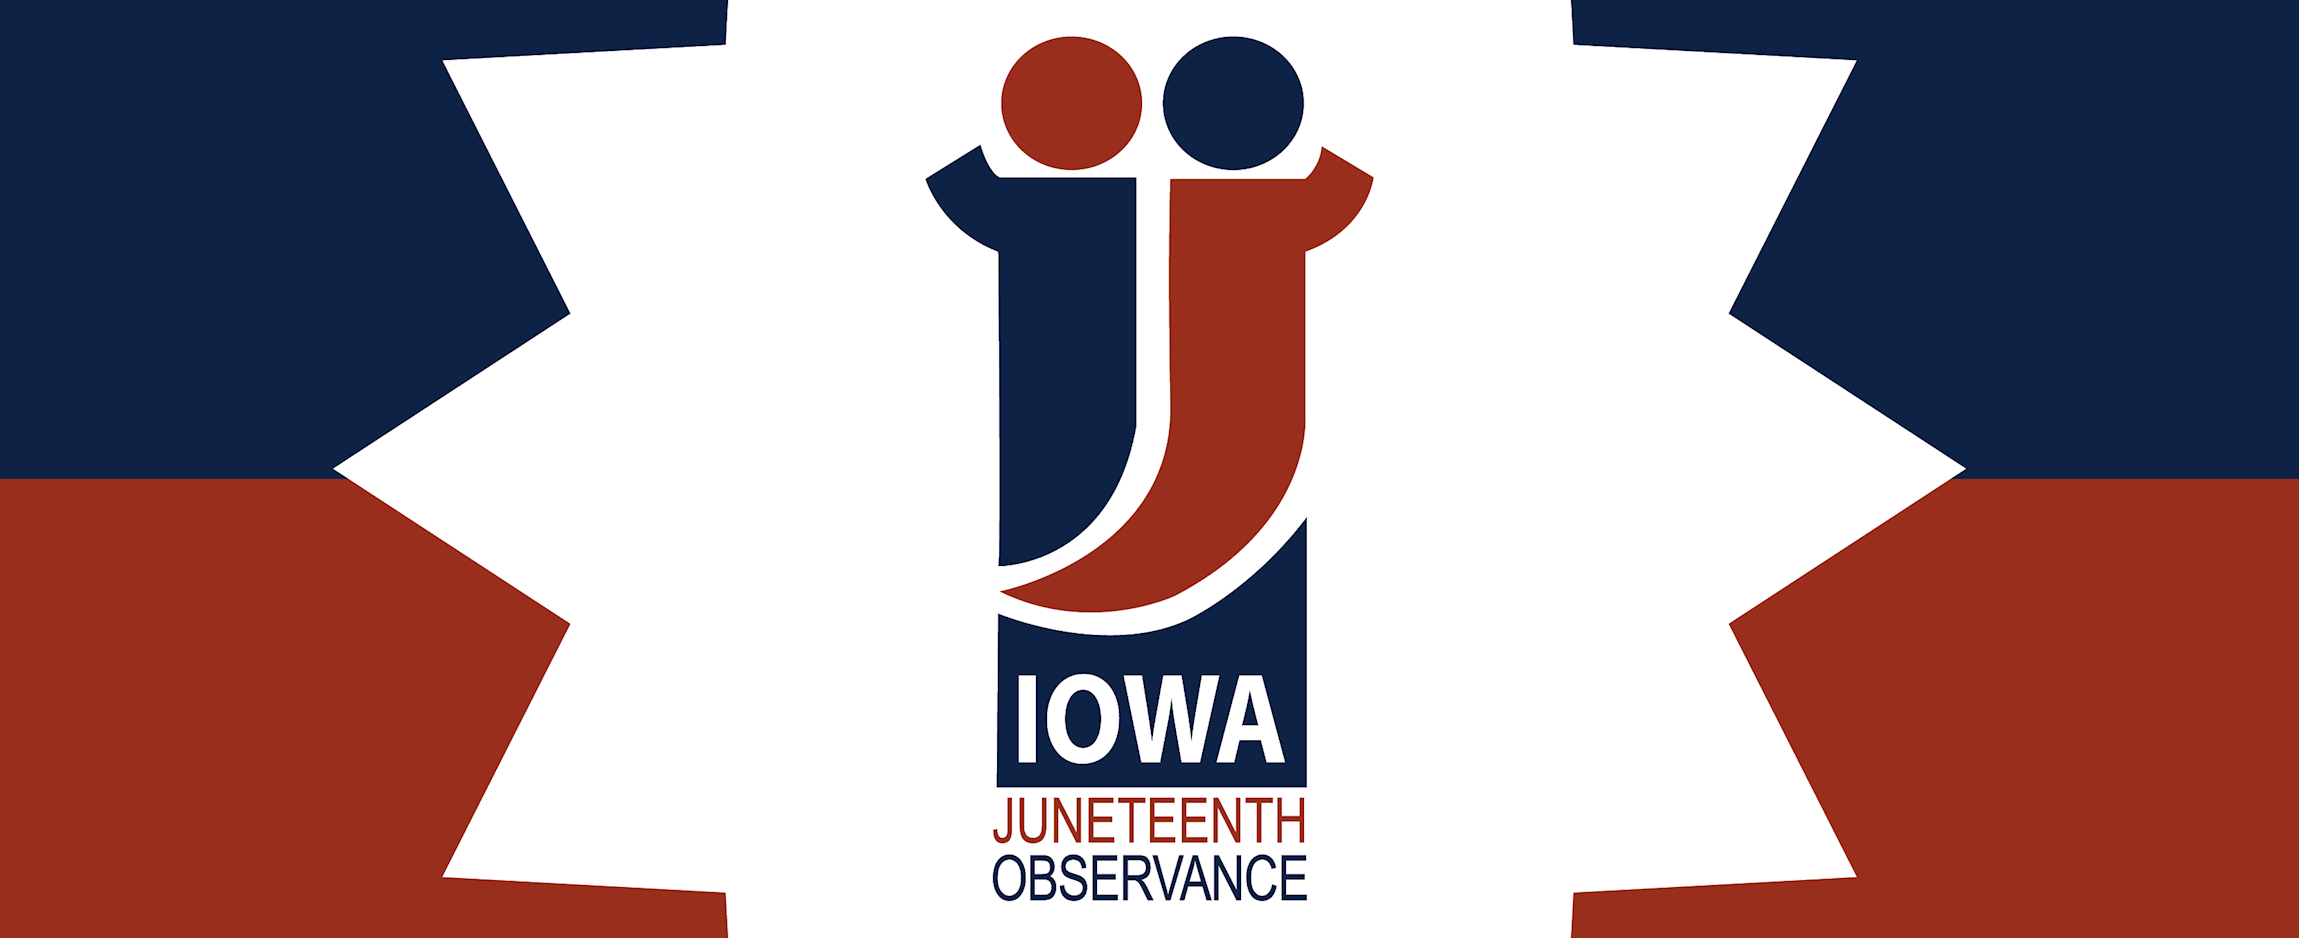 Iowa Juneteenth Observance